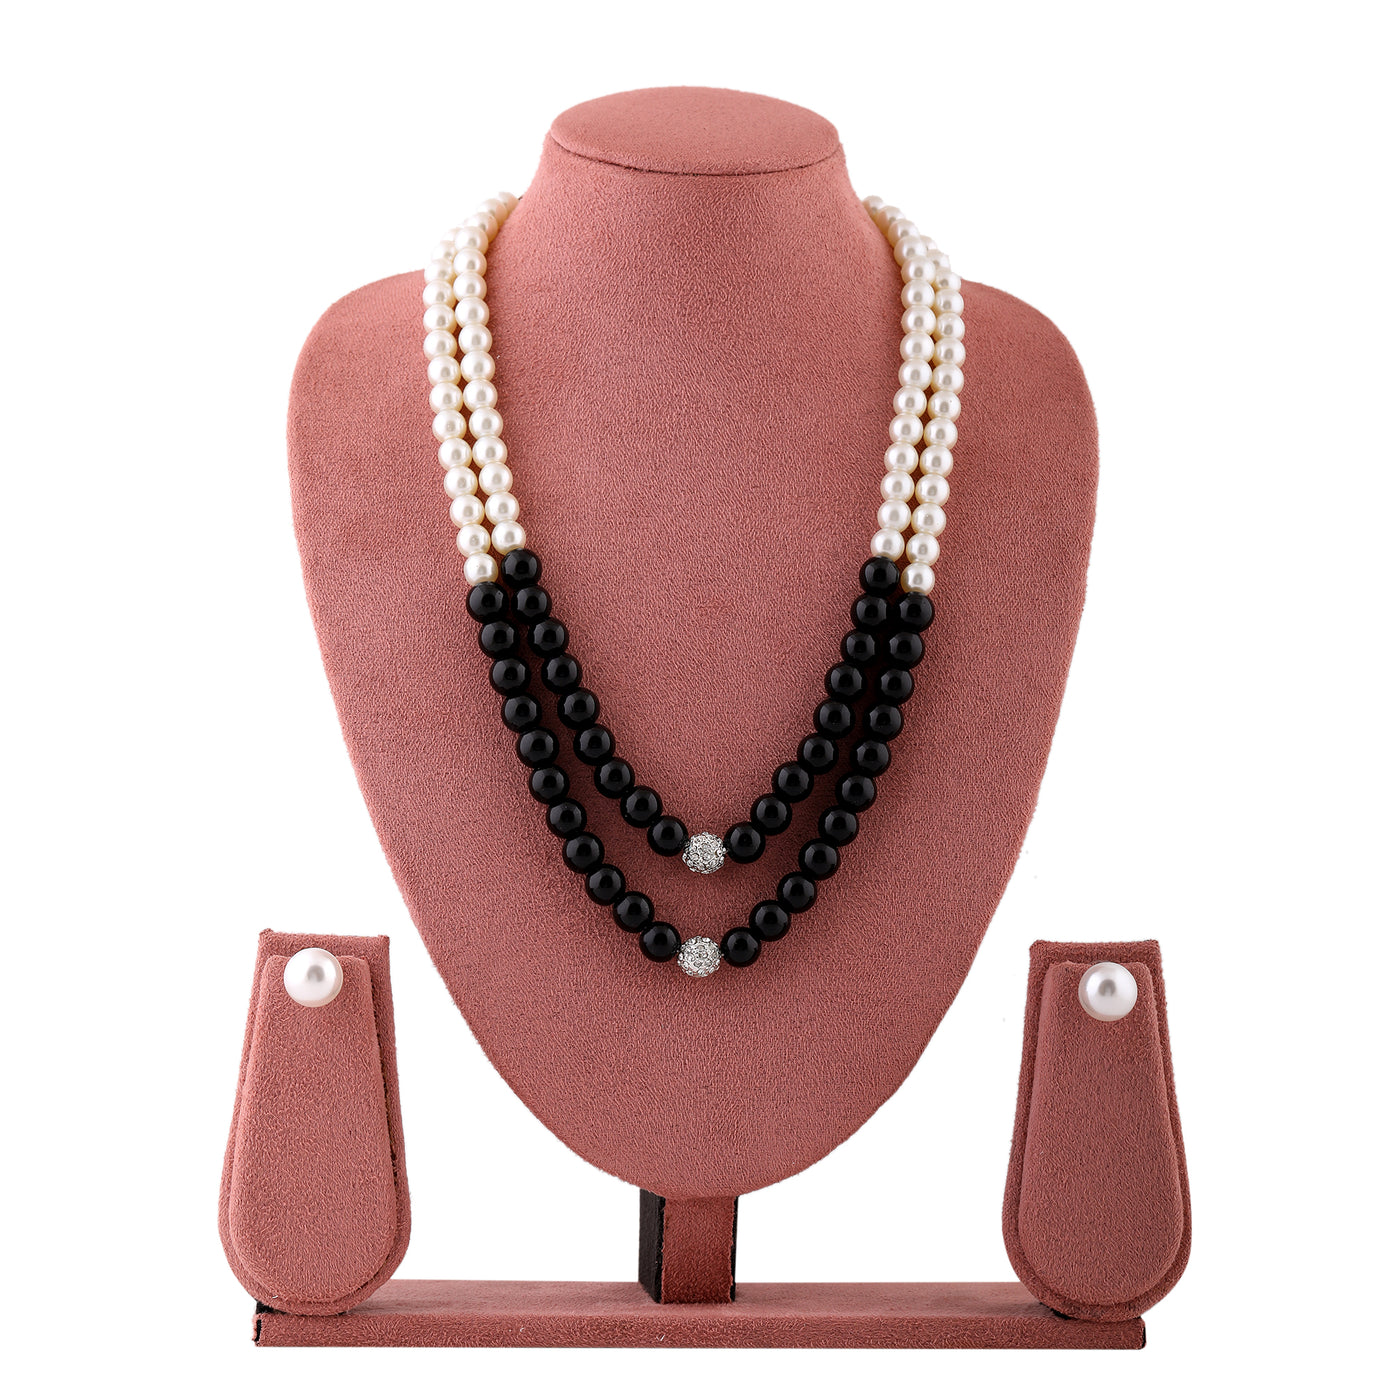 Estele Rhodium Plated Classic Double Line Pearl Necklace Set for Women